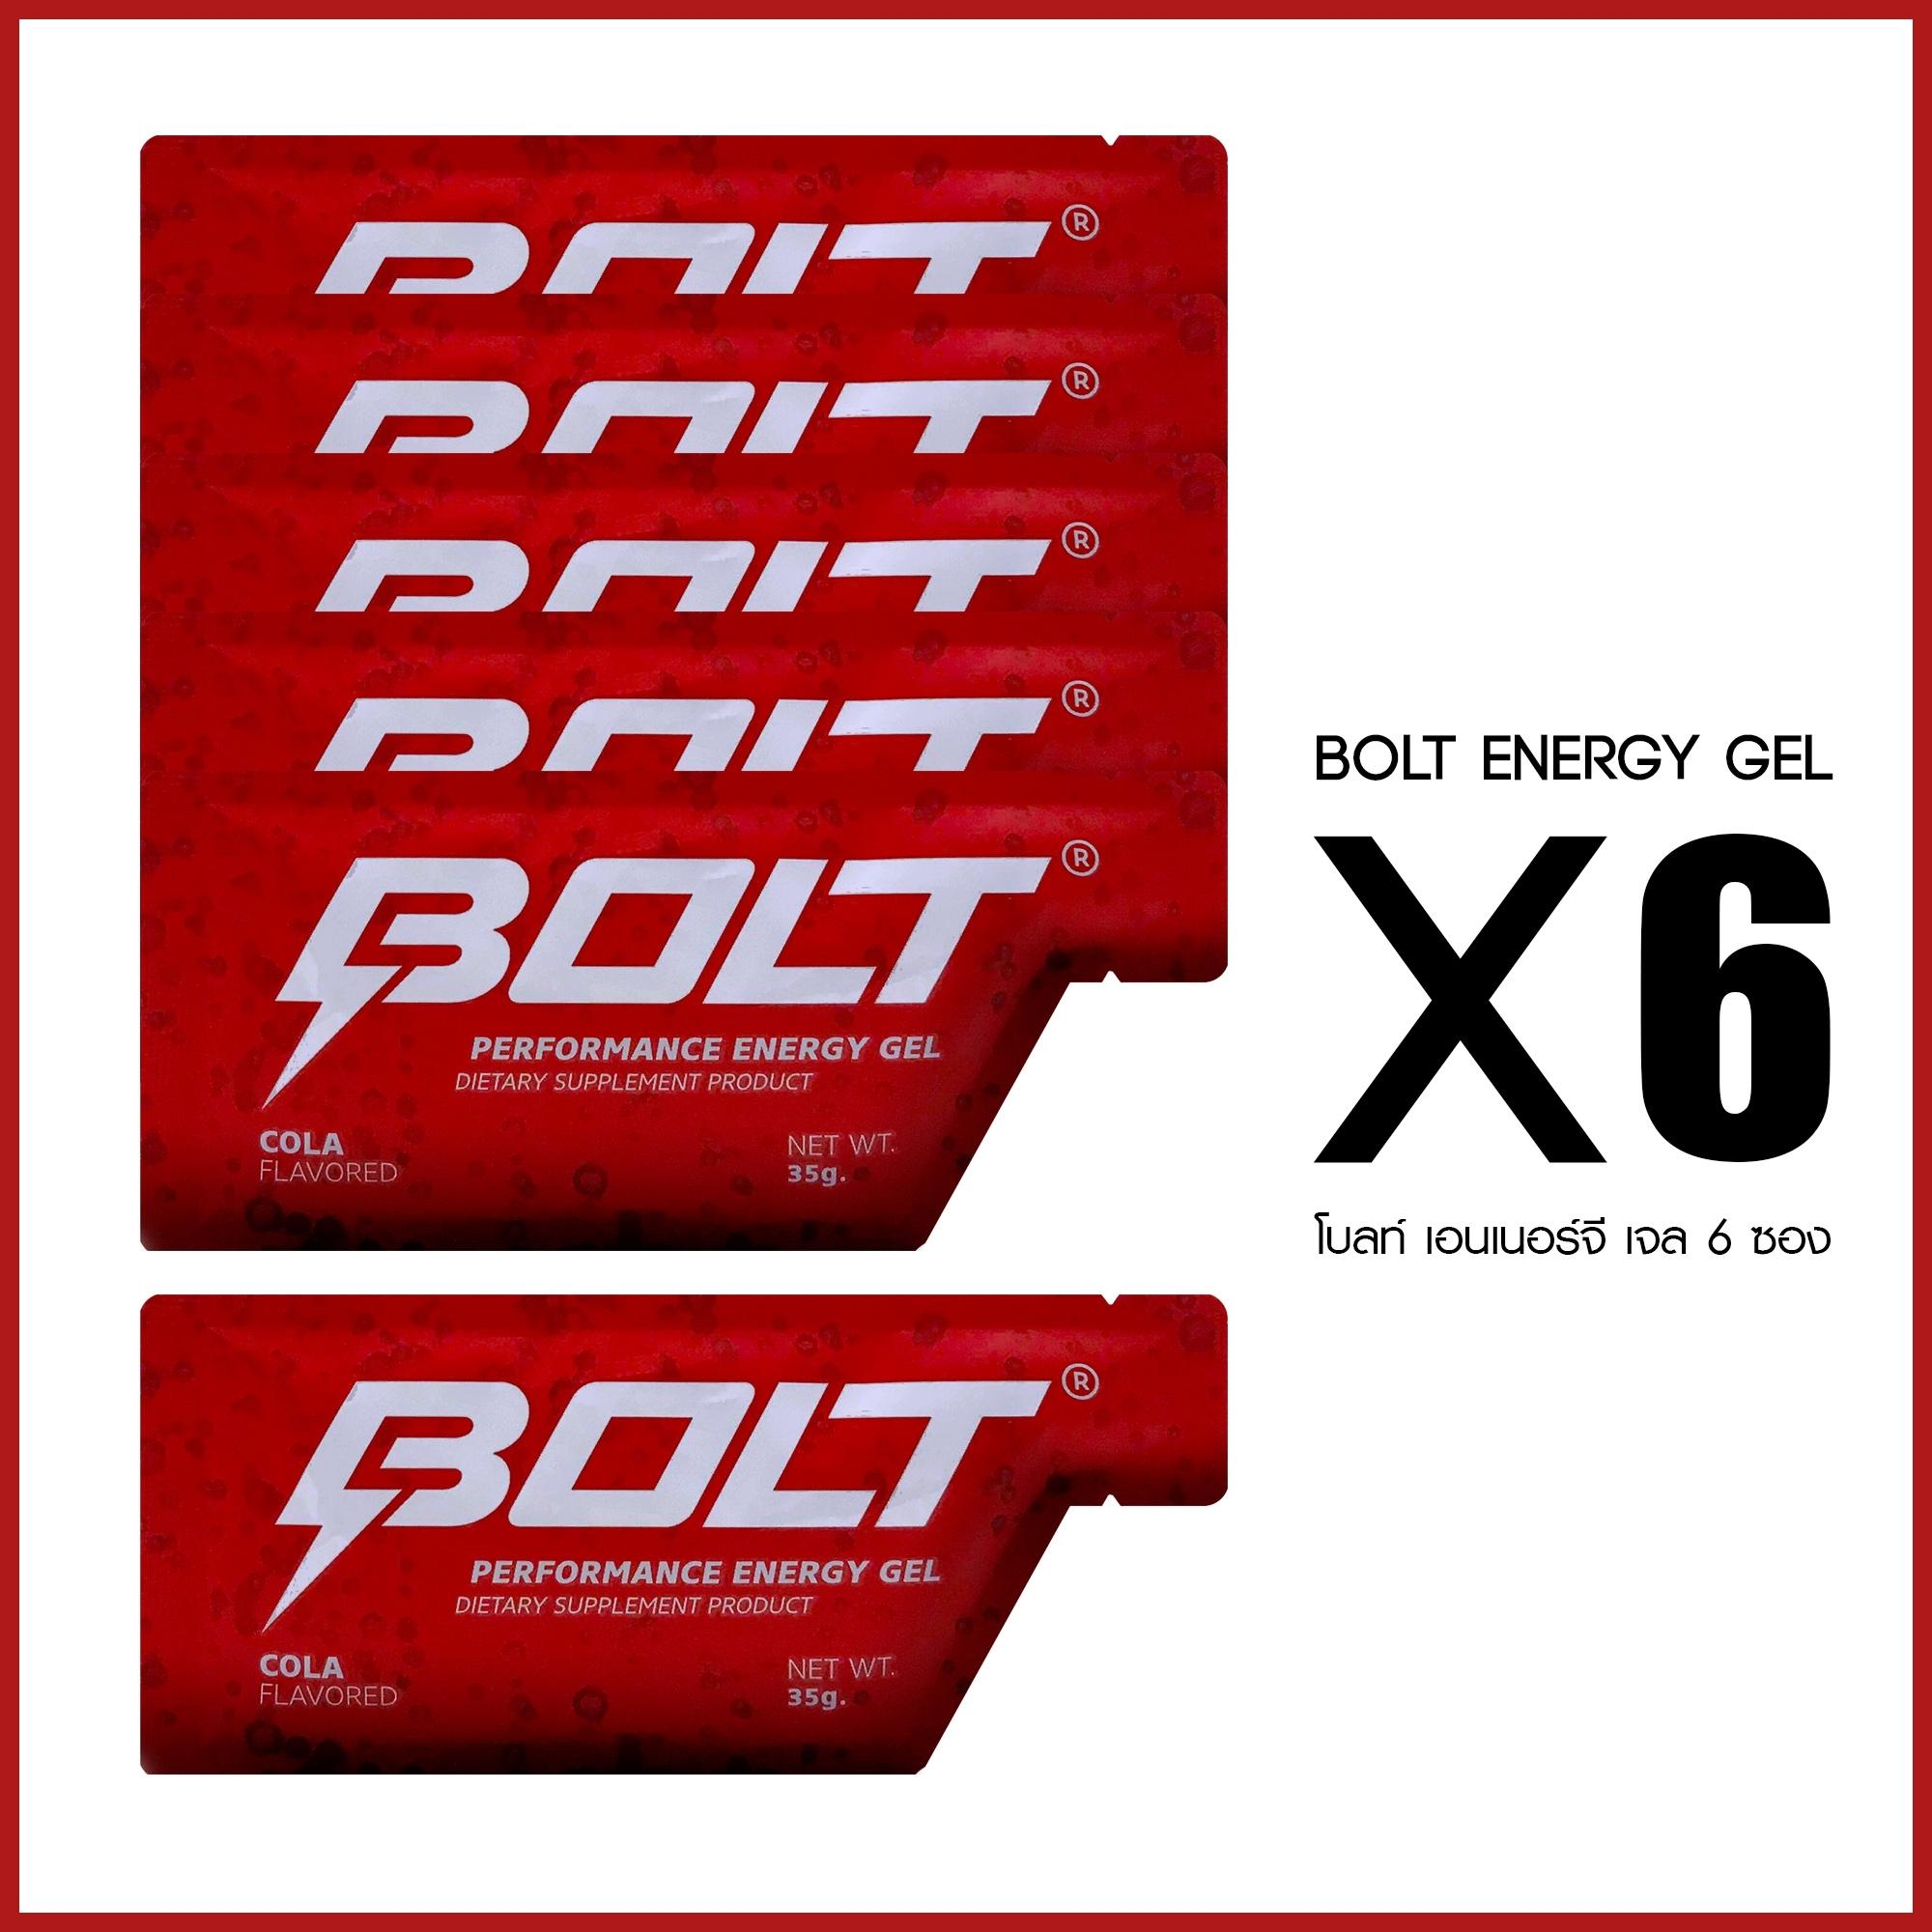 Bolt Energy Gel Cola (set of 6 envelopes) NET WT. 35g. เจลให้พลังงานโบลท์ รสโคล่า (ชุด 6 ซอง) ขนาด 35 กรัม